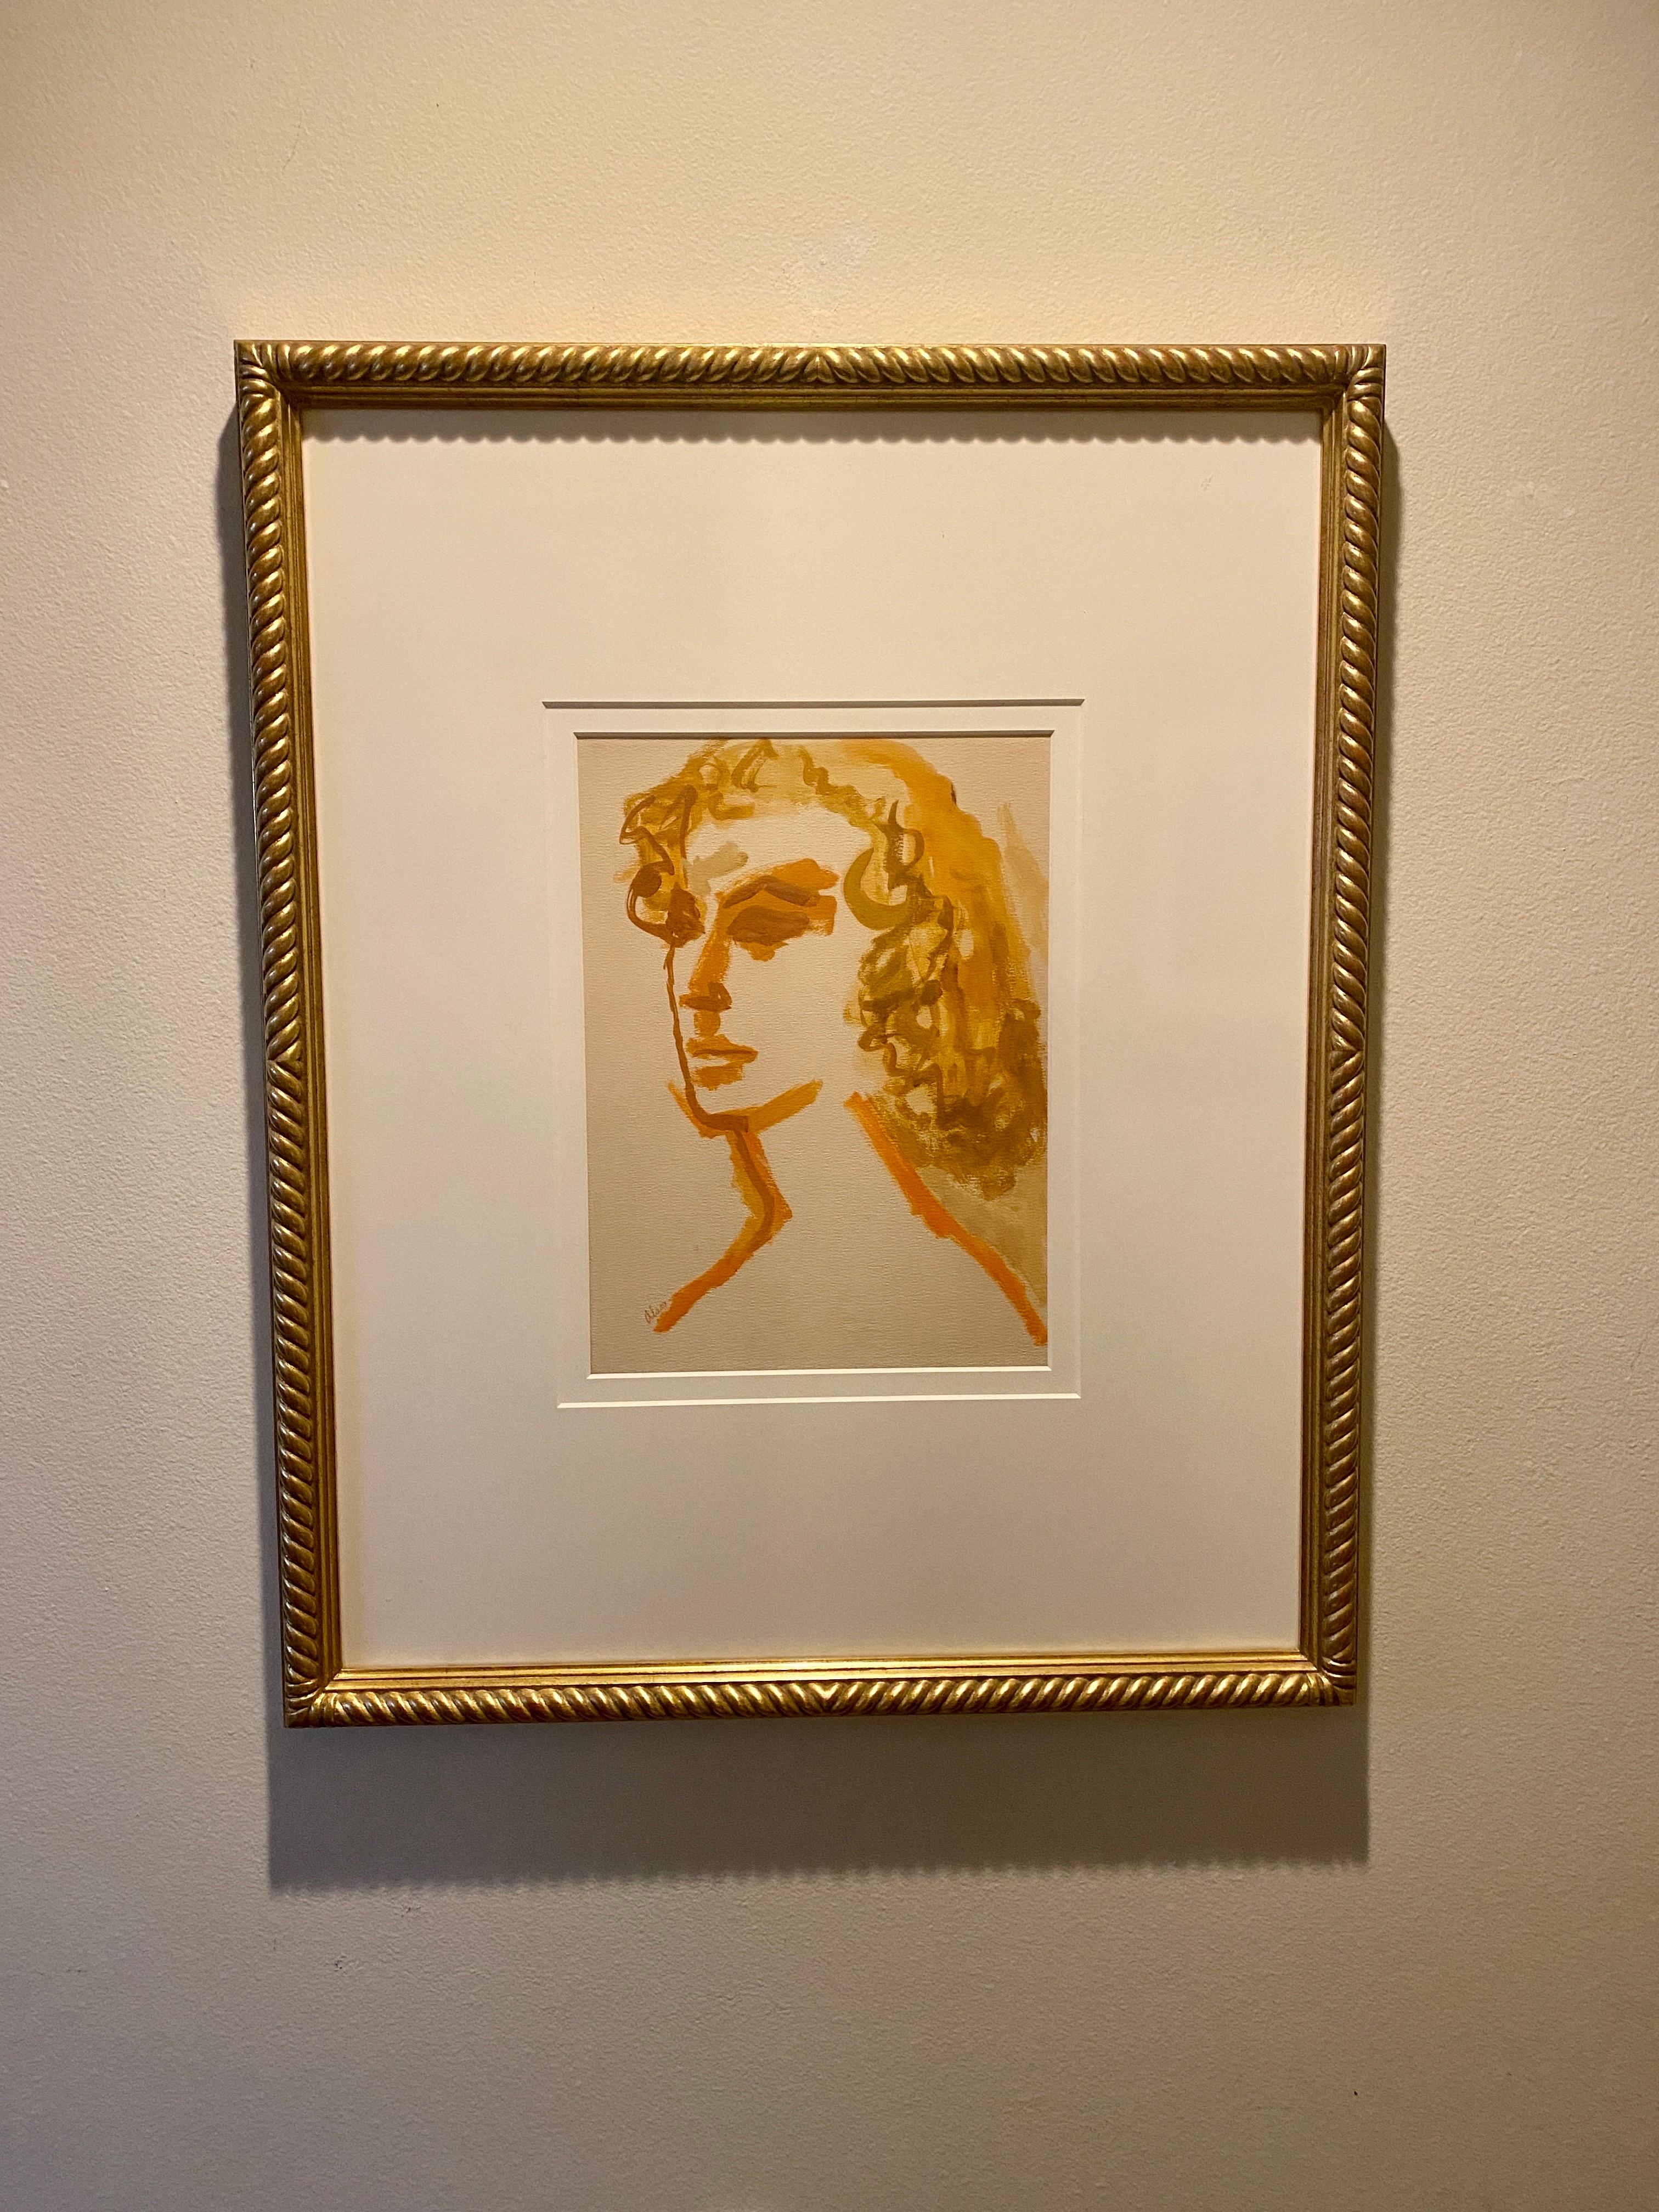 American Modern Portrait of a Woman Large Original Painting Gold Leaf Frame Orange Tones For Sale